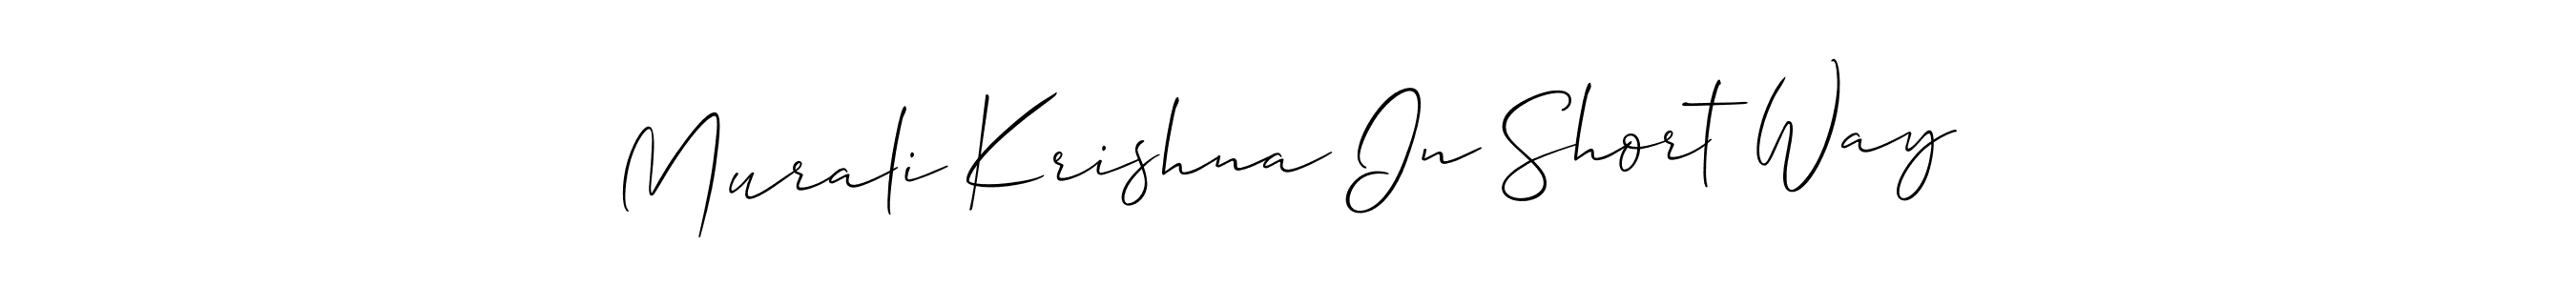 Similarly Allison_Script is the best handwritten signature design. Signature creator online .You can use it as an online autograph creator for name Murali Krishna In Short Way. Murali Krishna In Short Way signature style 2 images and pictures png